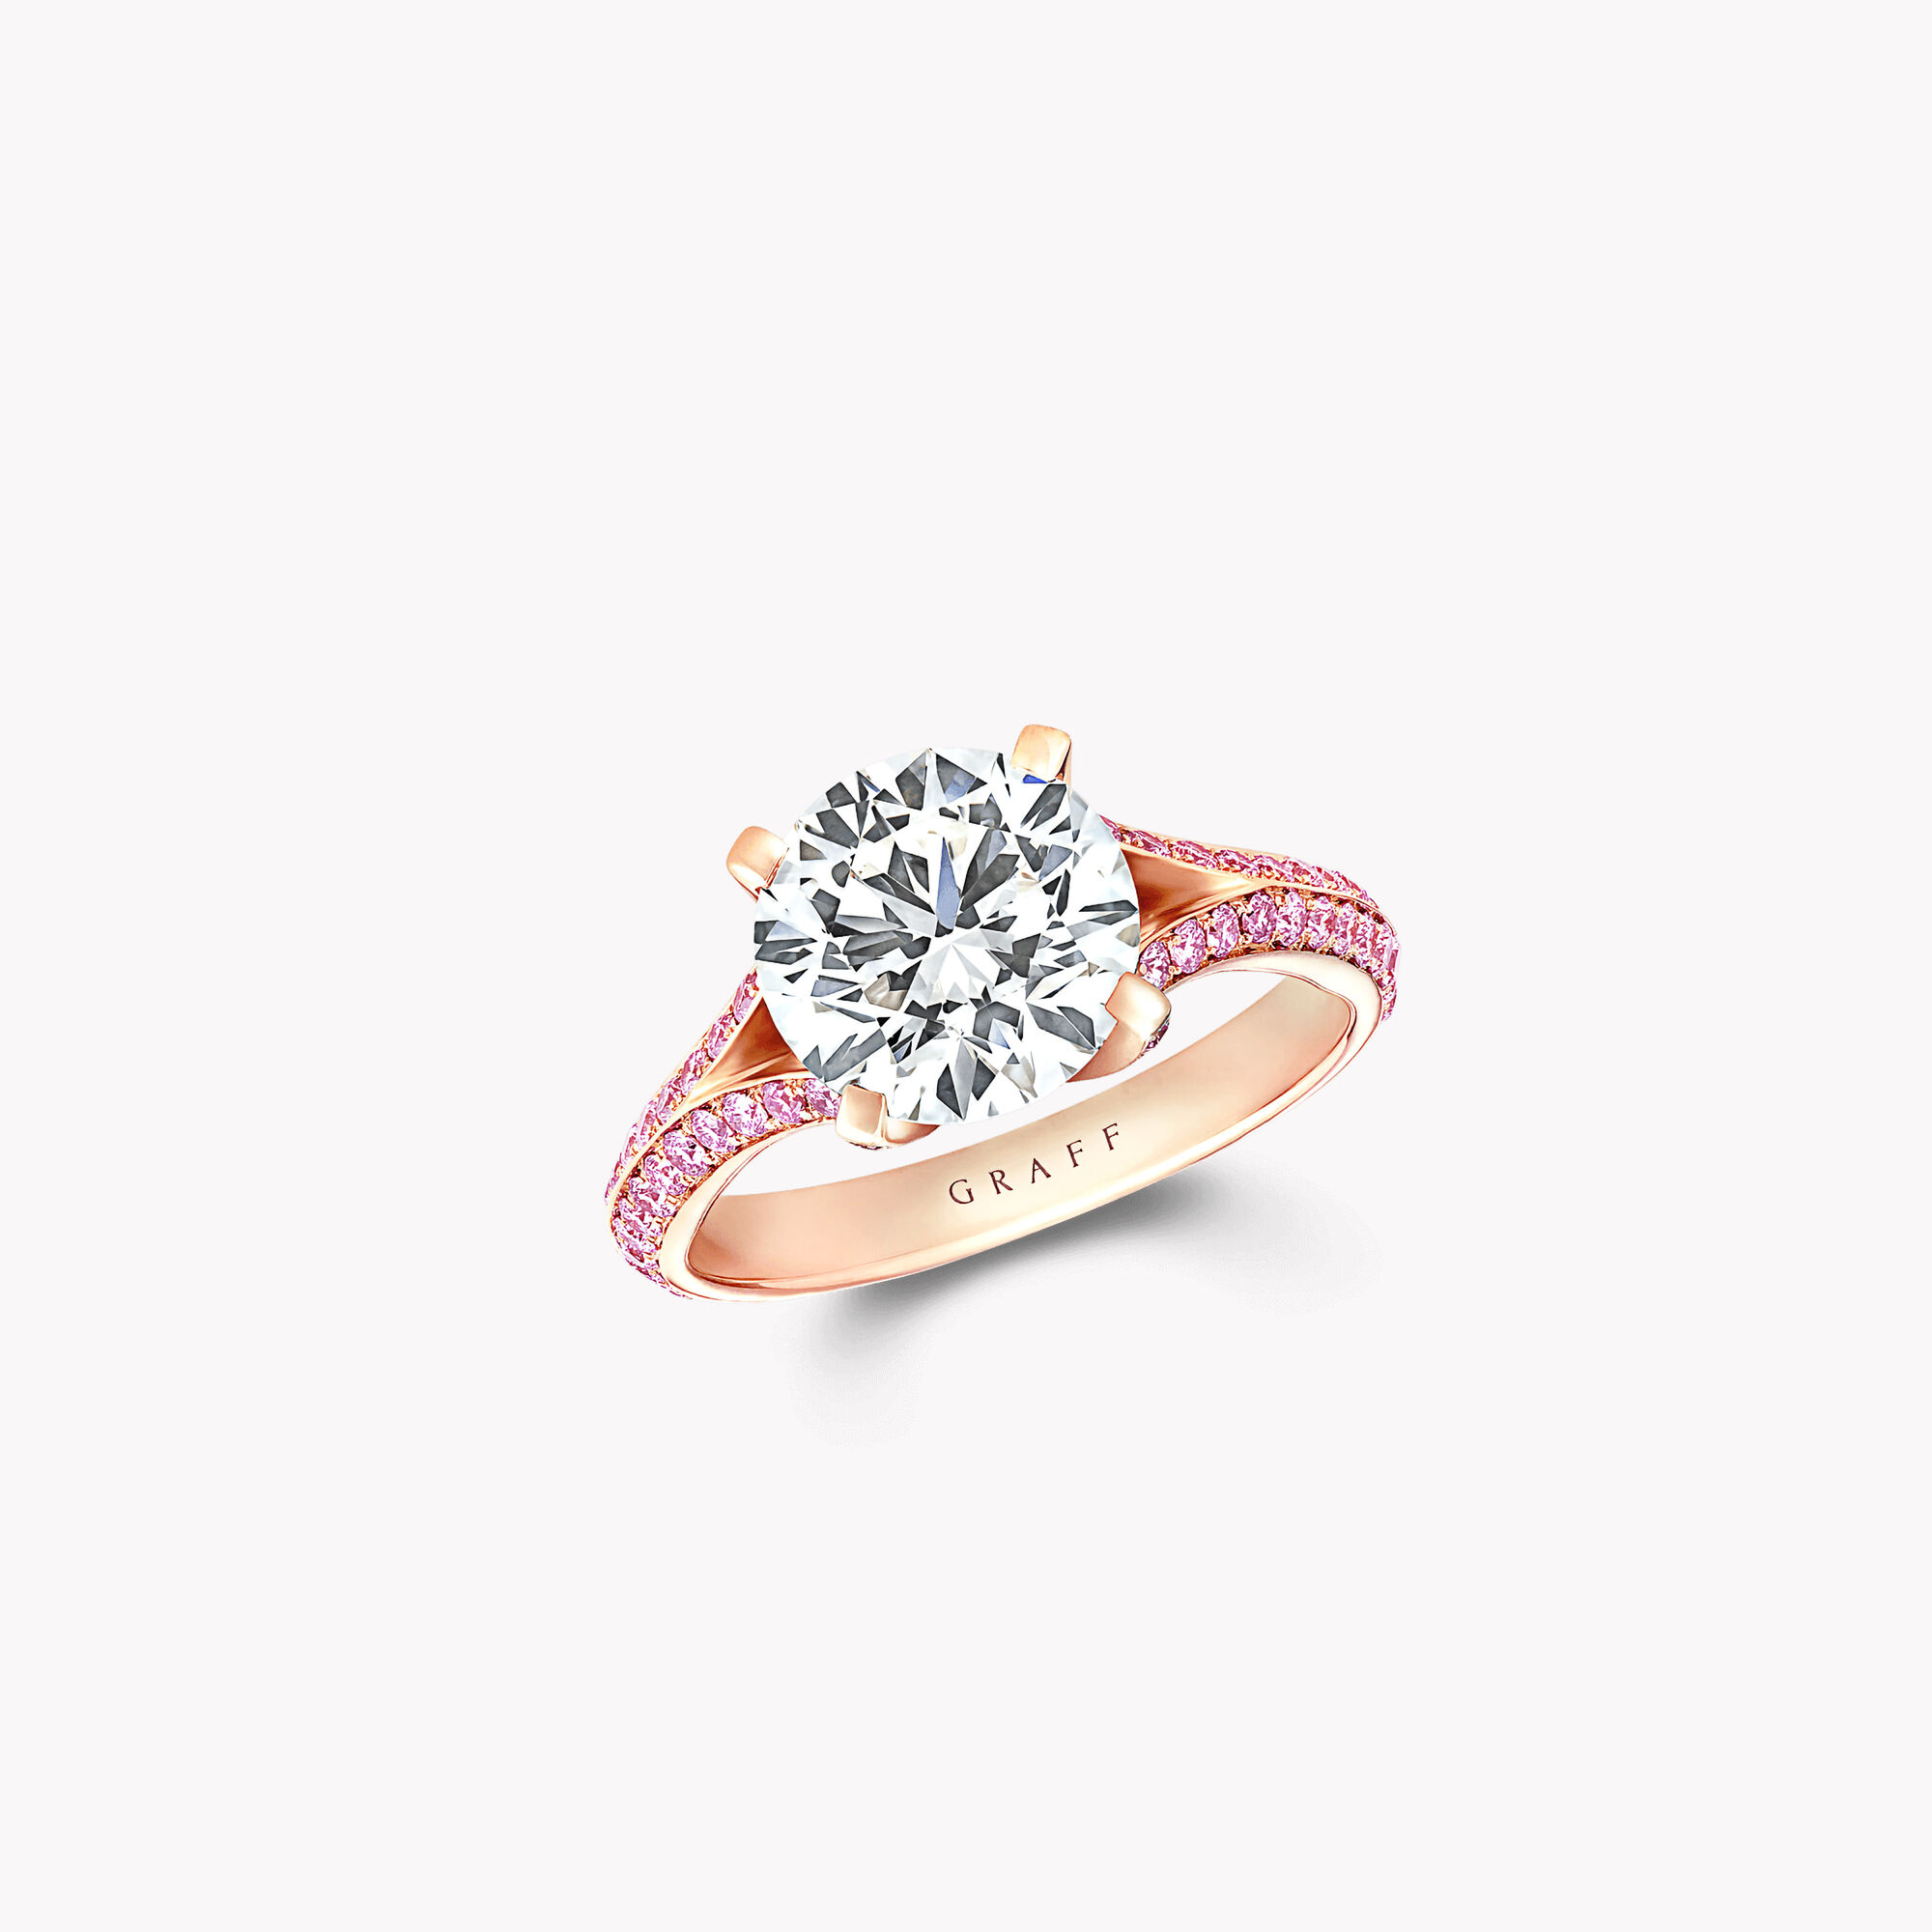 Graff Legacy Round Diamond Engagement Ring - Rose Gold